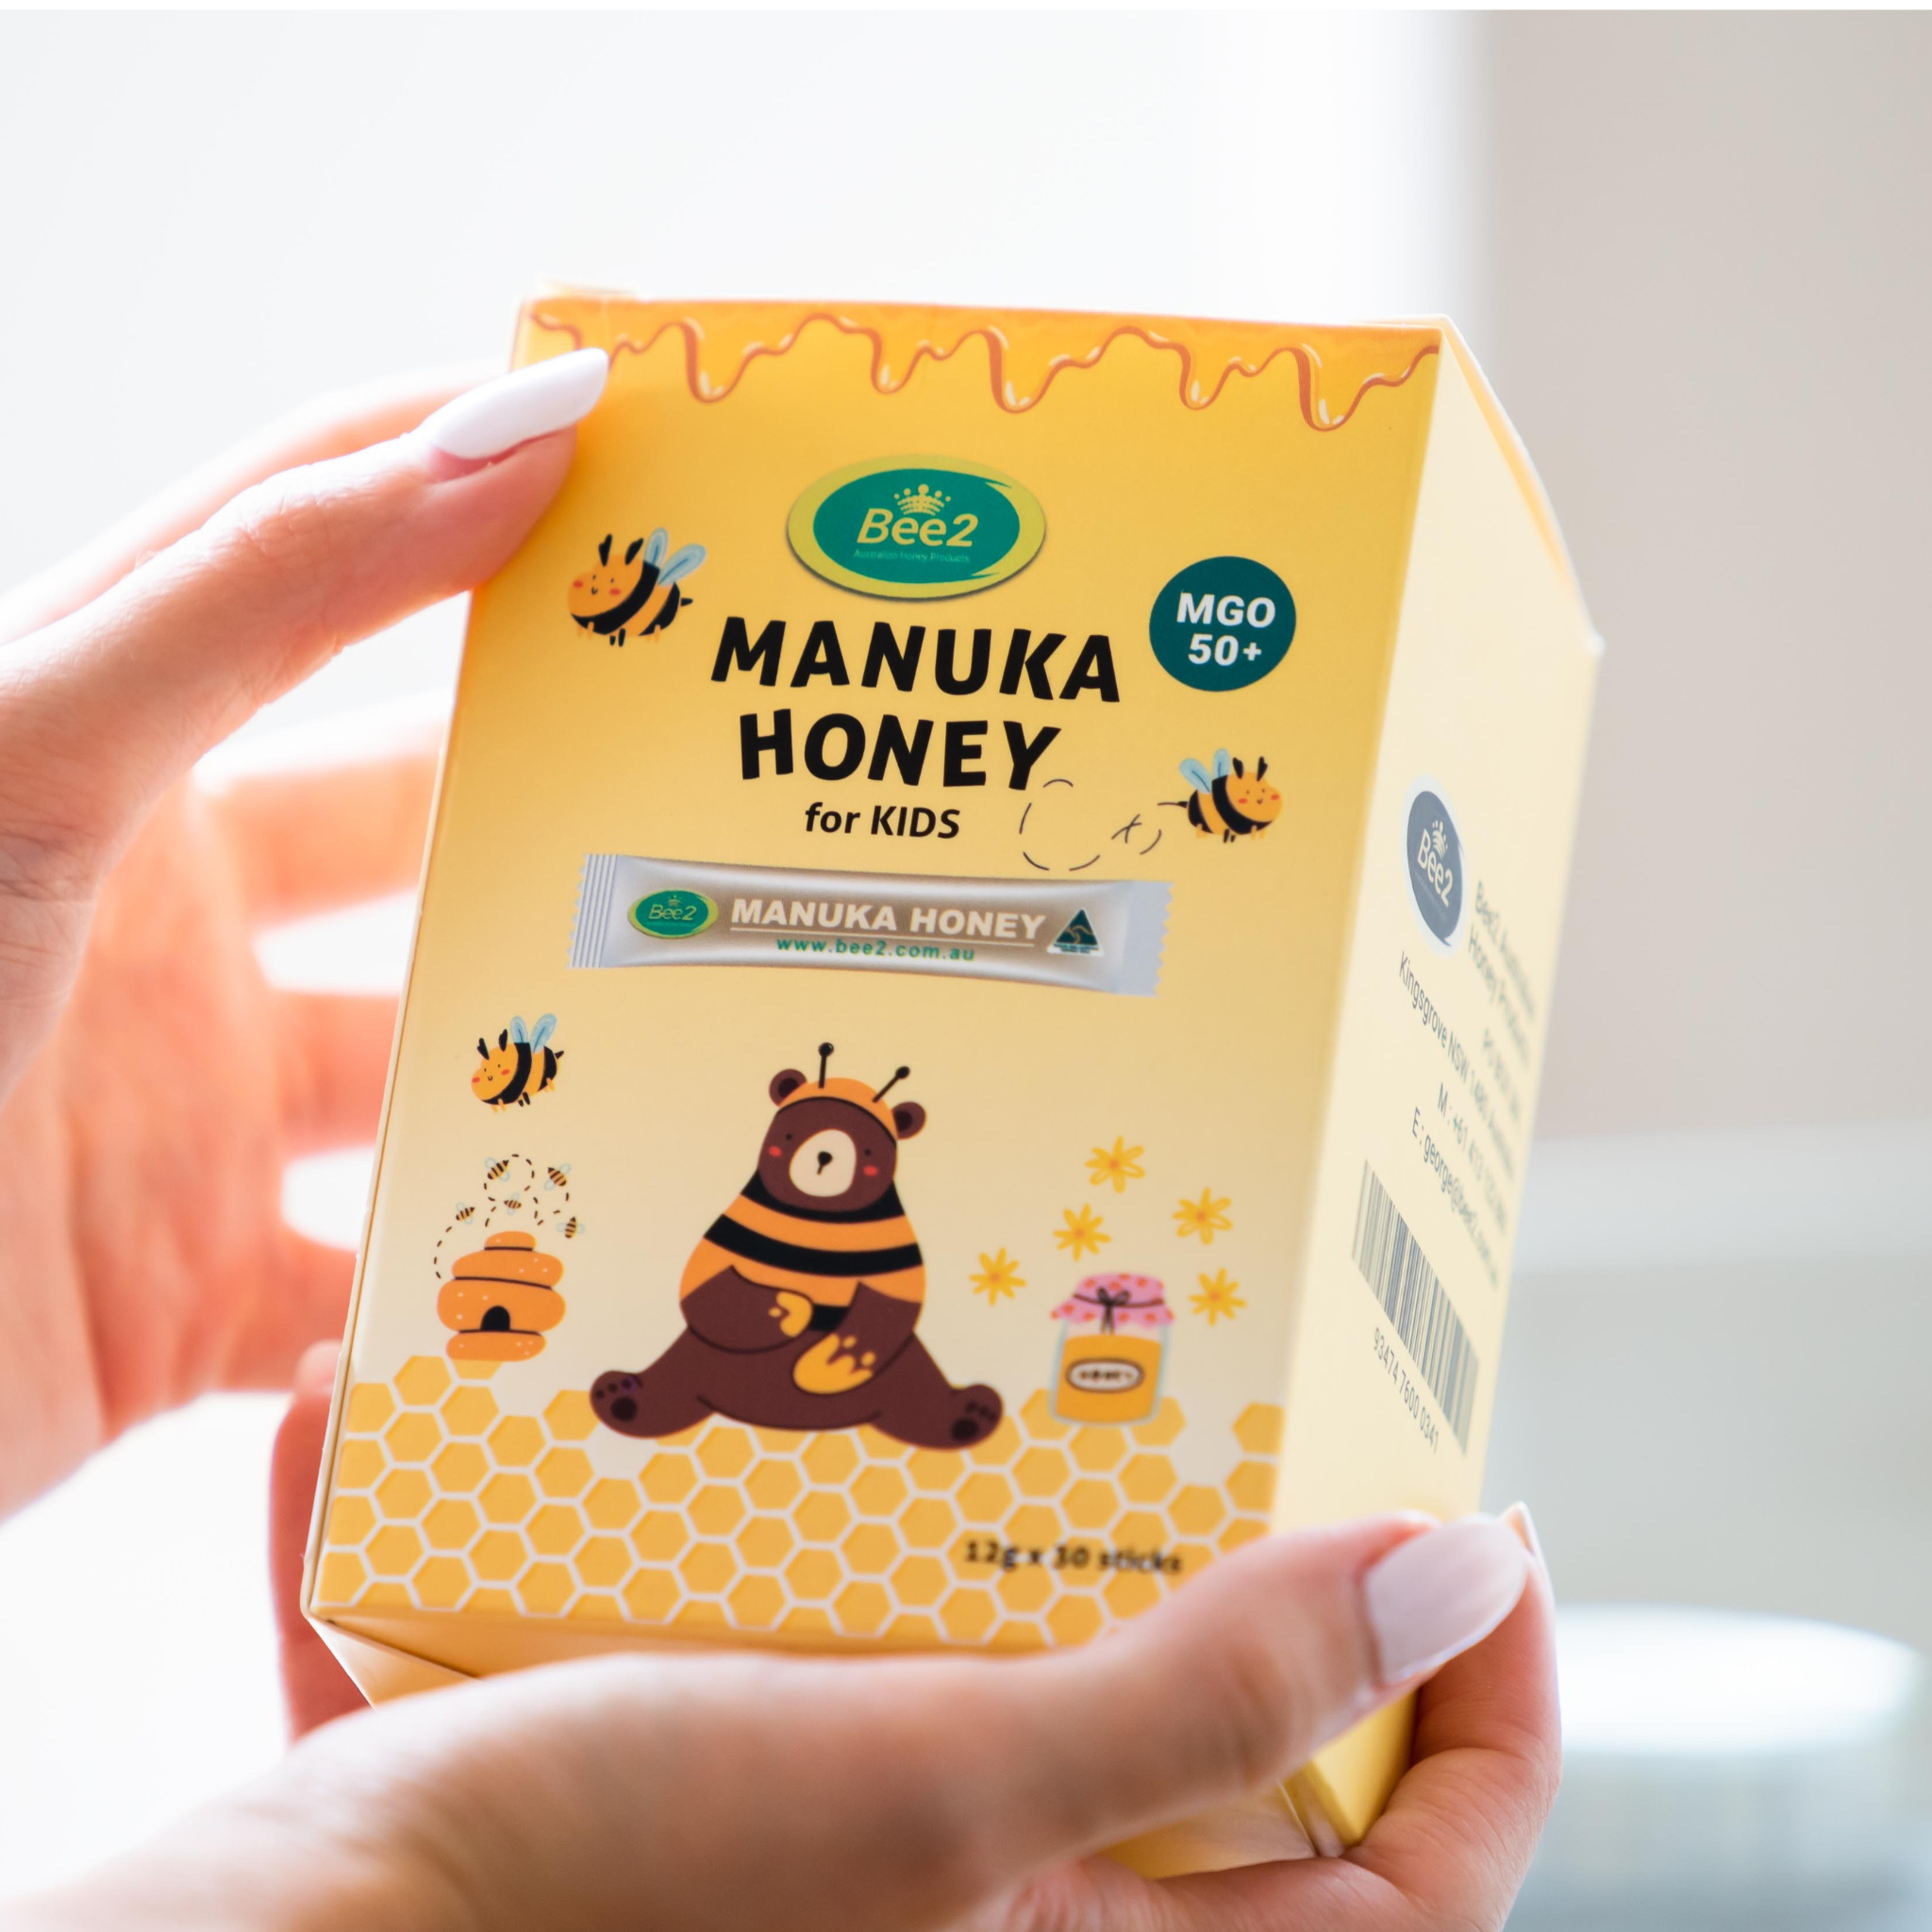 Bee2 Manuka Honey For Kids MGO 50+